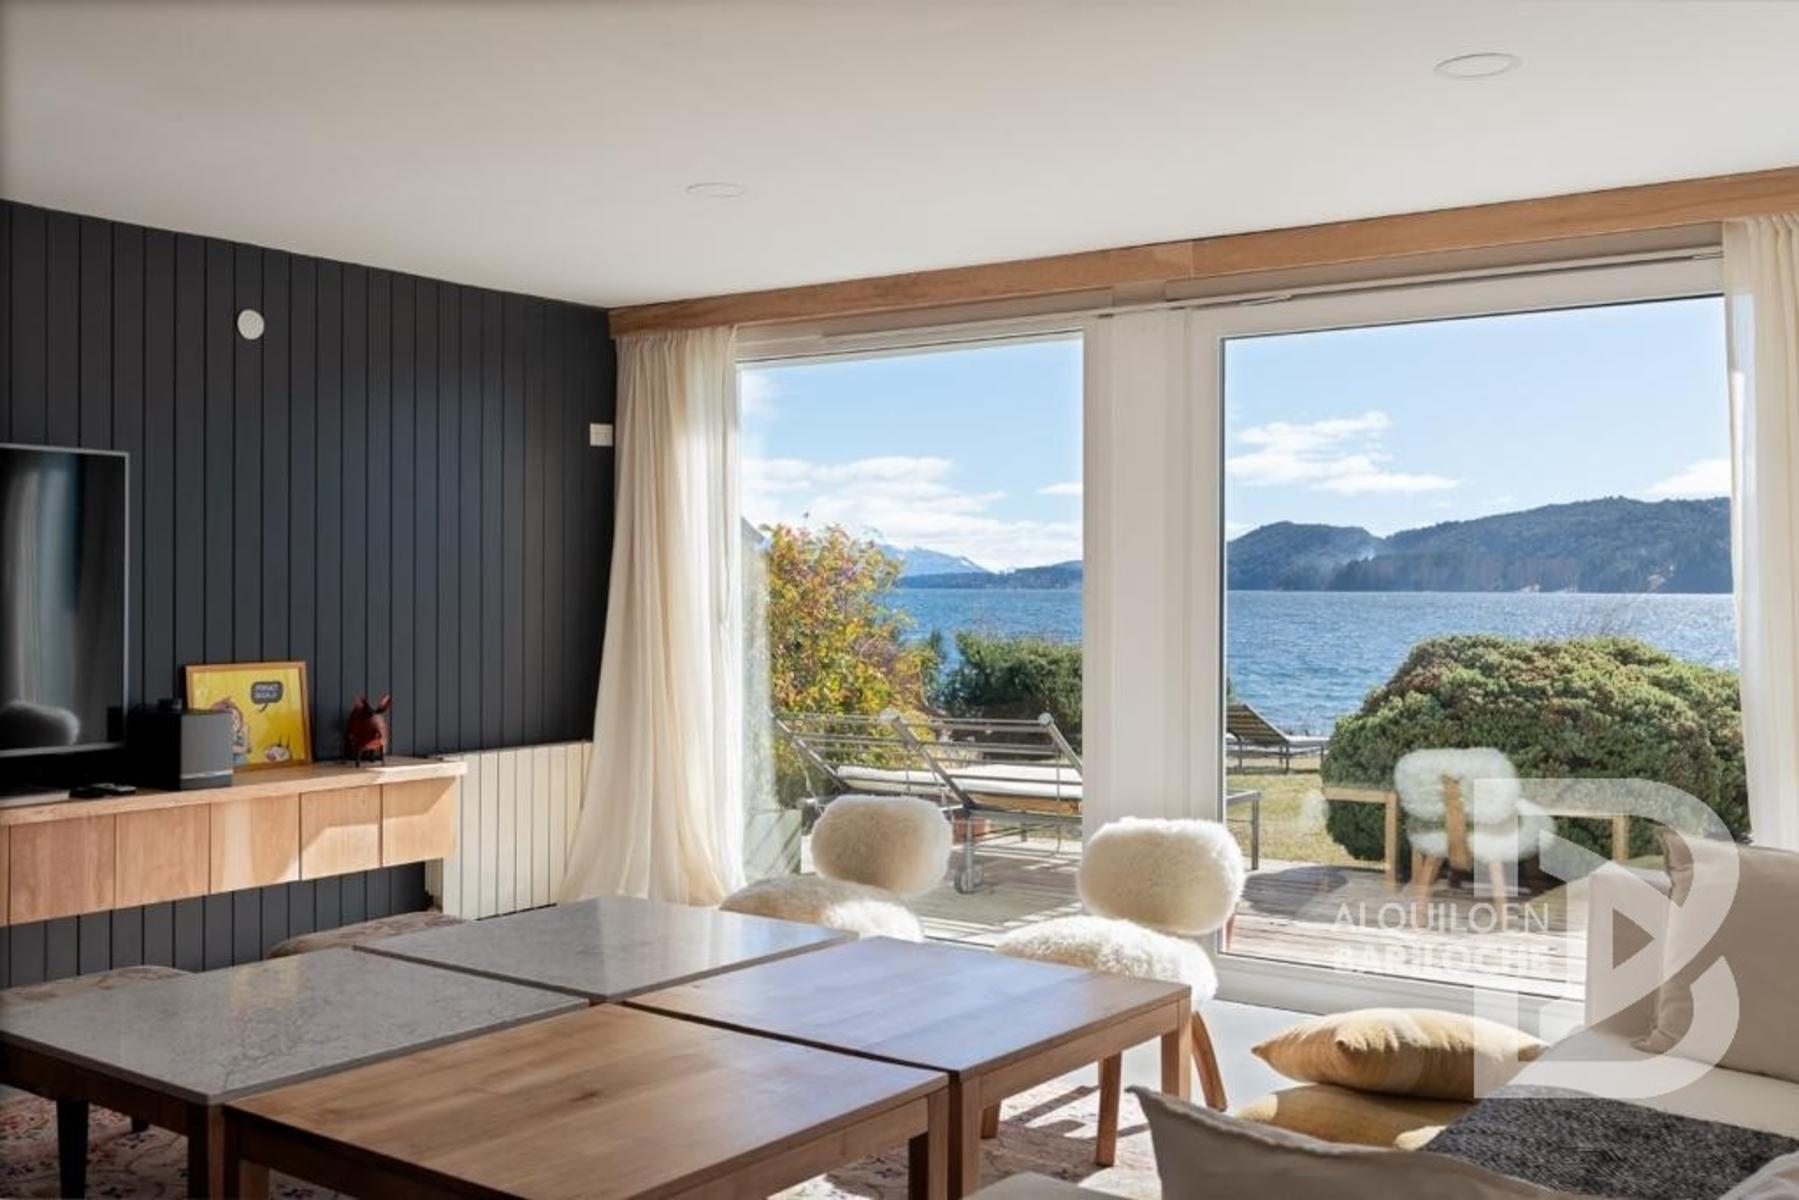 Alquiler Casa en Bariloche con Costa de Lago Nahuel Huapi. 8 PAX. Km10.